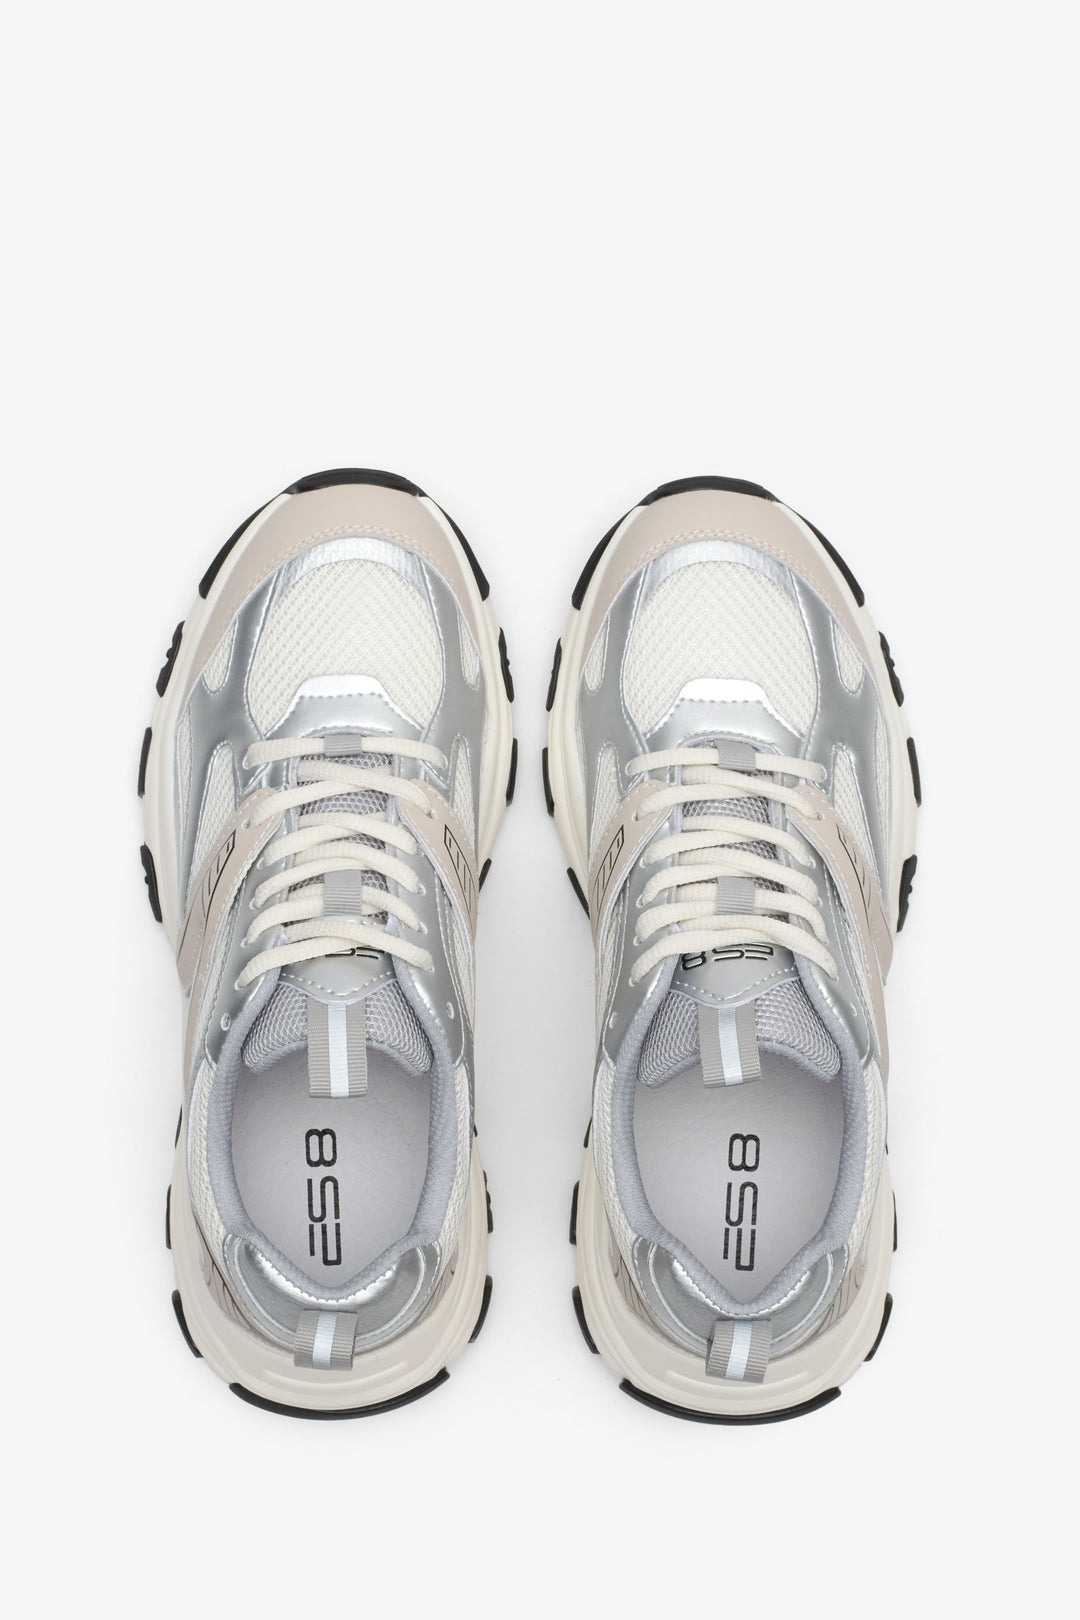 ES8 women's sneakers in milky beige-silver color - top view presentation of the model.